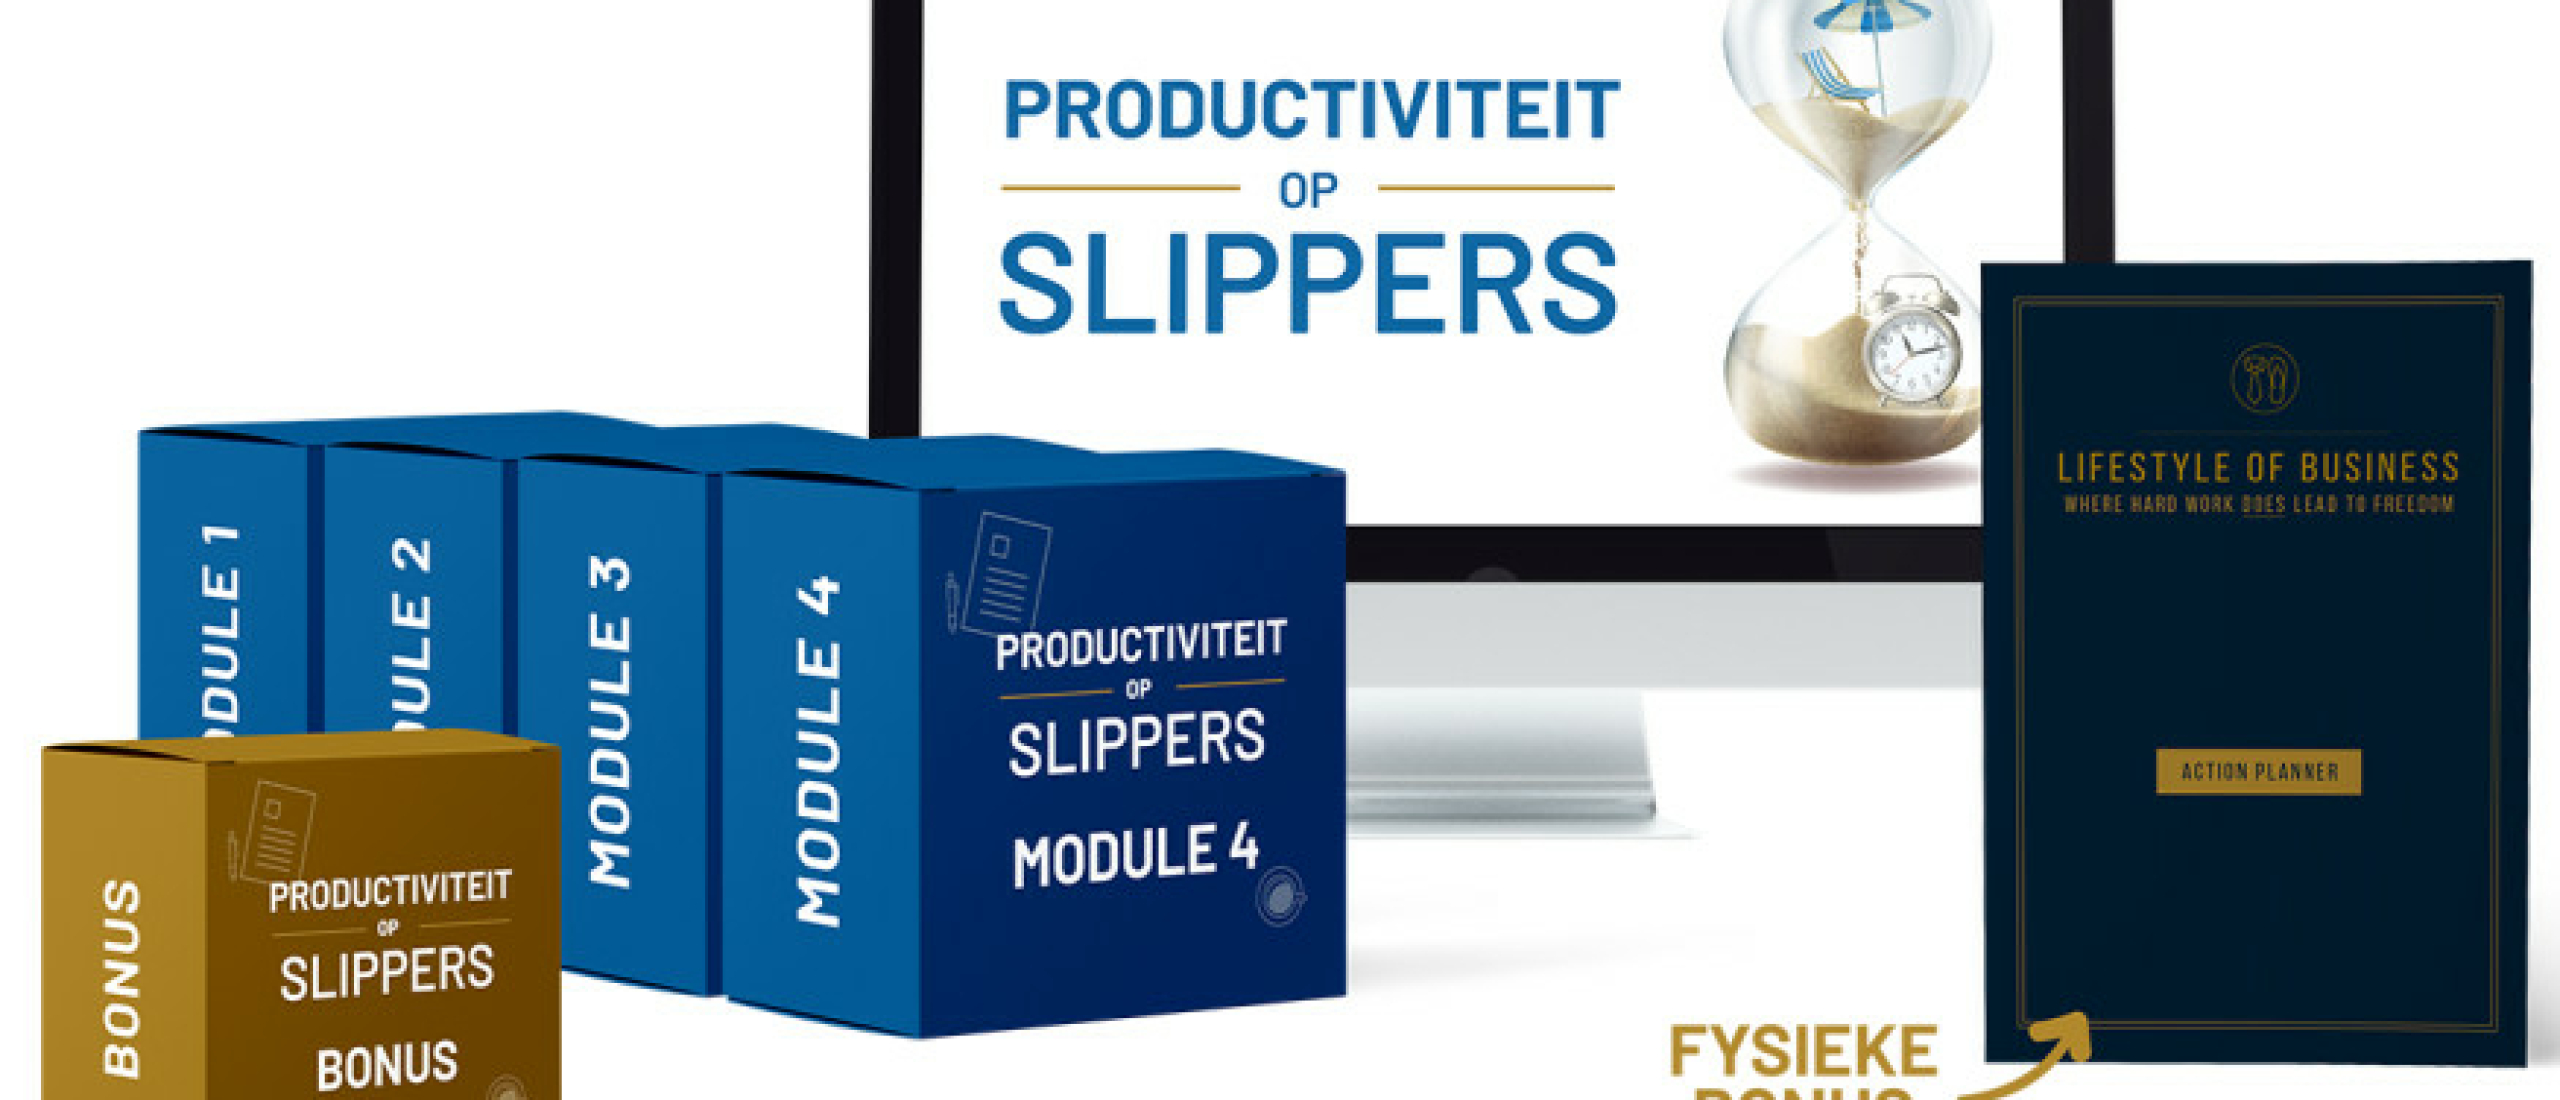 Productiviteit verhogen - Lifestyle of Business - Productiviteit op slippers cursus - Review & Ervaringen